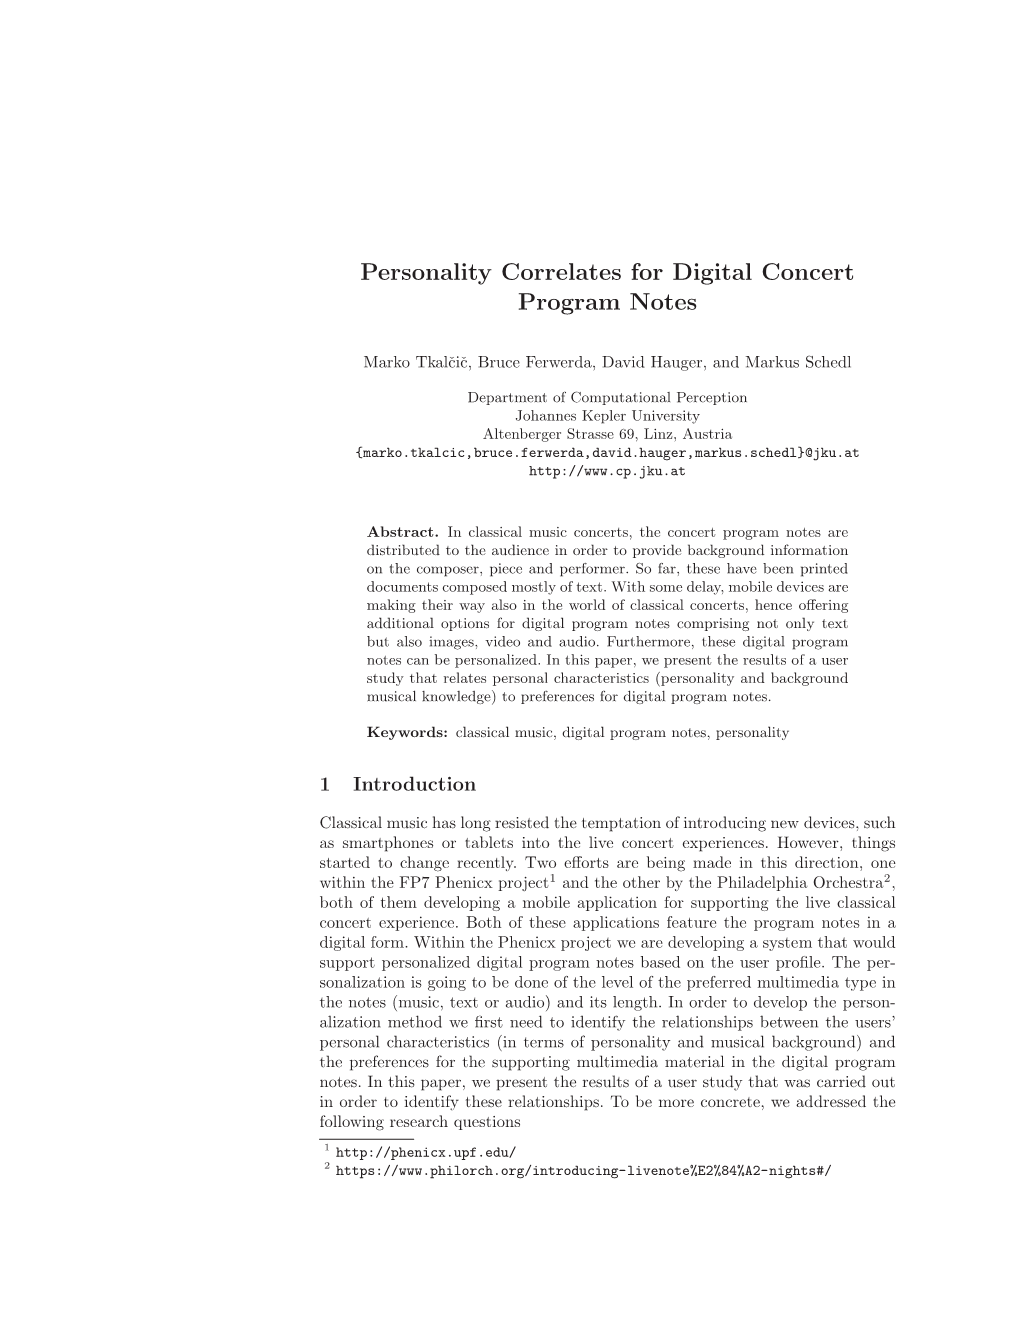 Personality Correlates for Digital Concert Program Notes